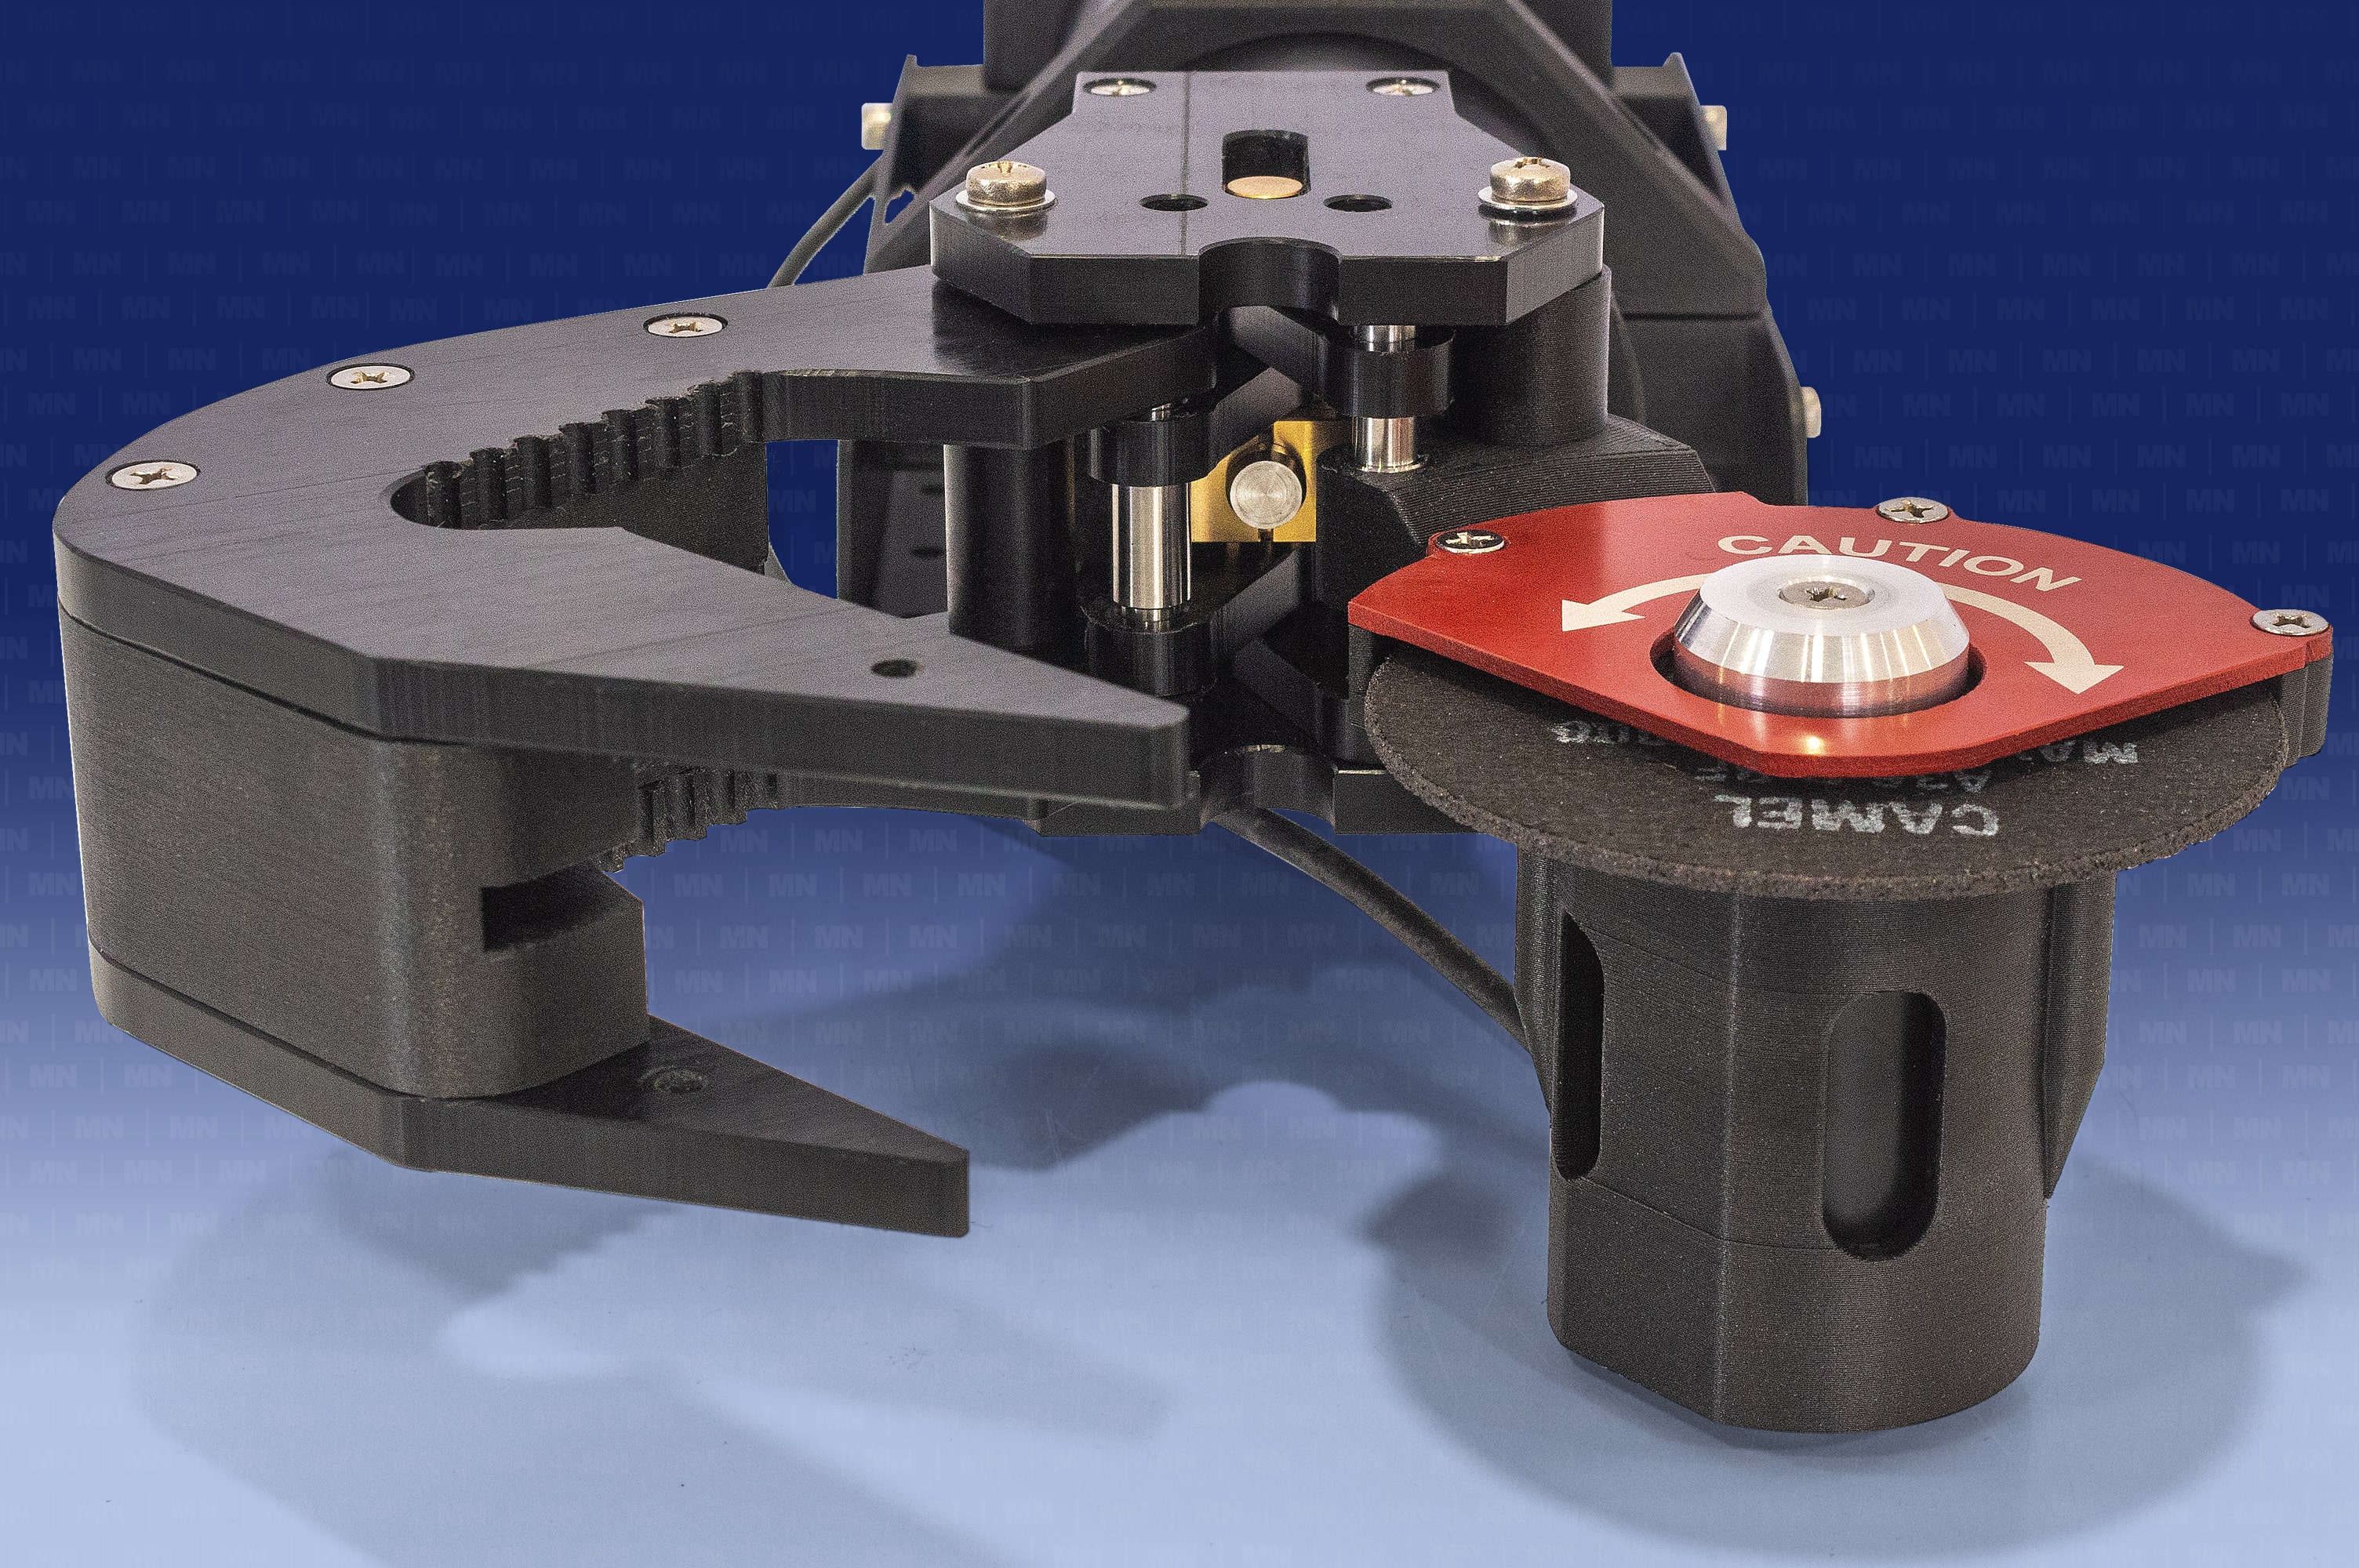 Rotating manipulator cutting tool head attachment (rotating manipulator sold separately).